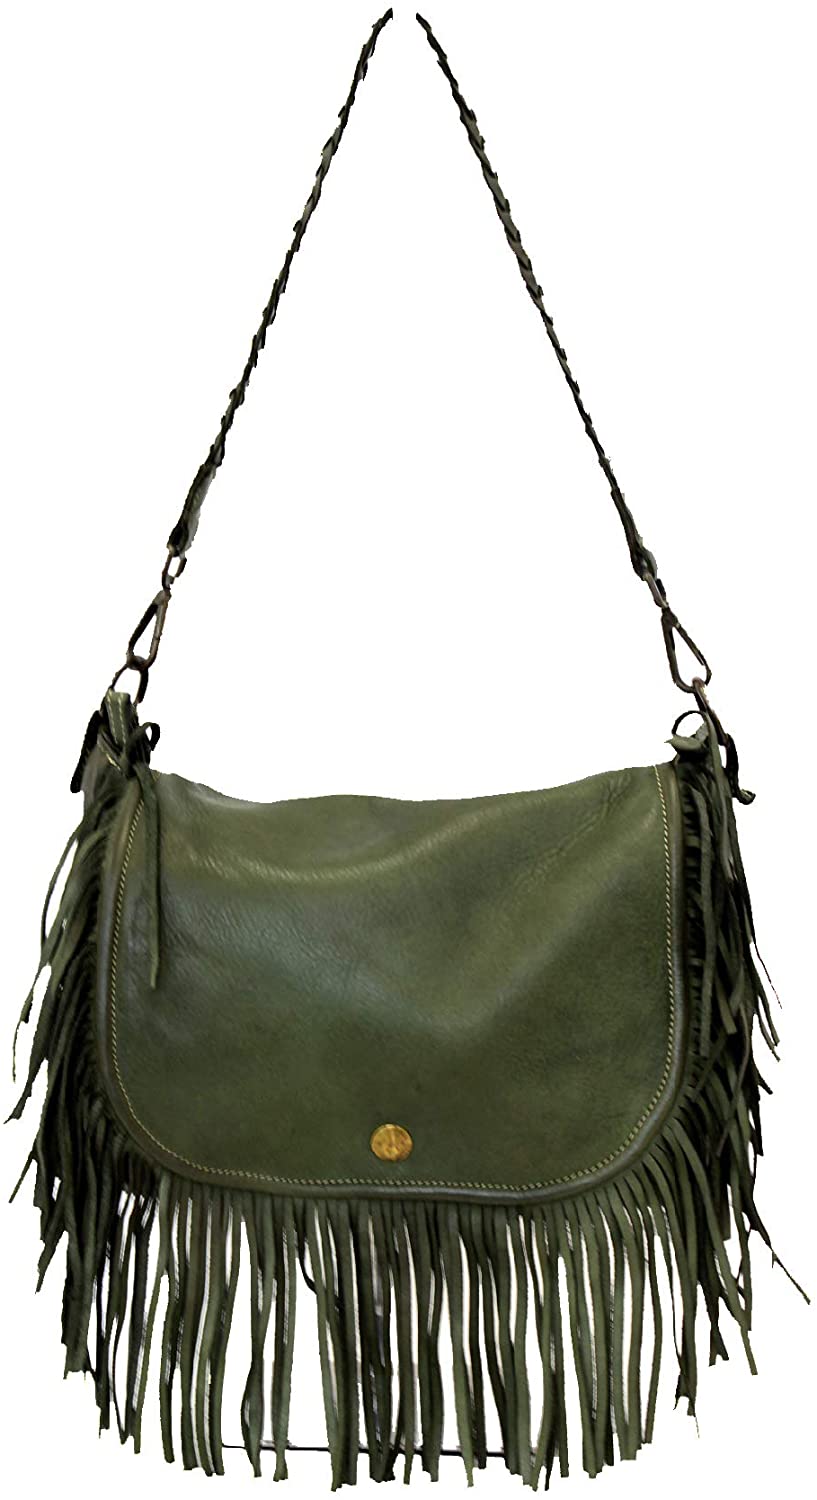 BZNA Bag Bari grün Italy Designer Damen Handtasche Ledertasche Schultertasche Tasche Leder Shopper Neu